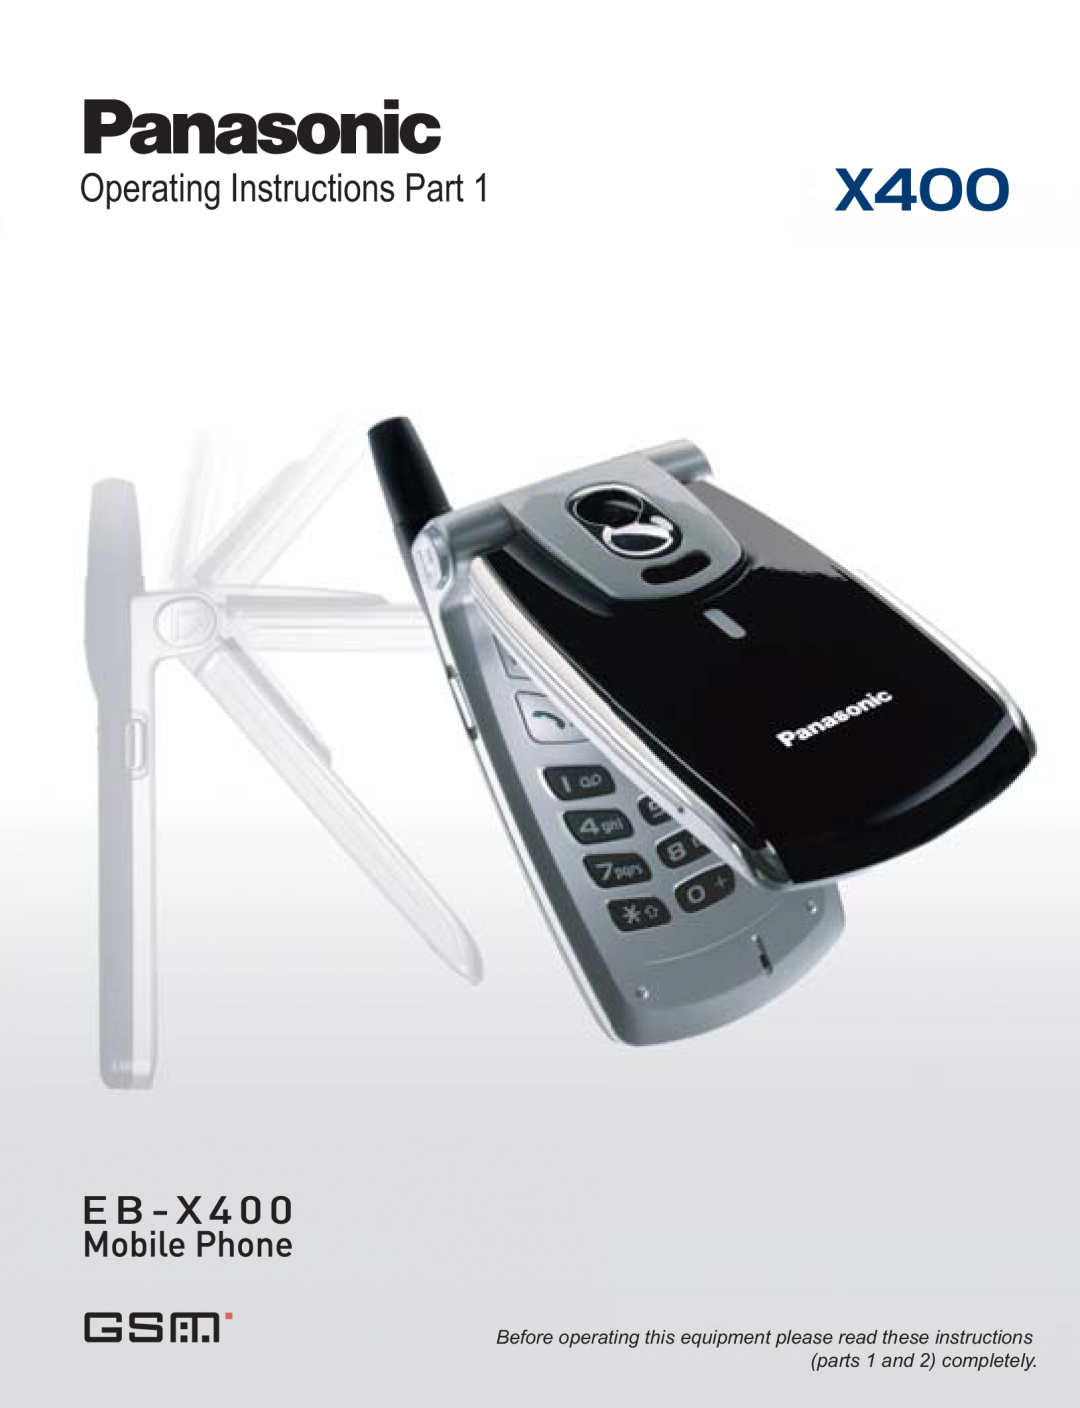 Panasonic EB-X400 operating instructions Operating Instructions Part 